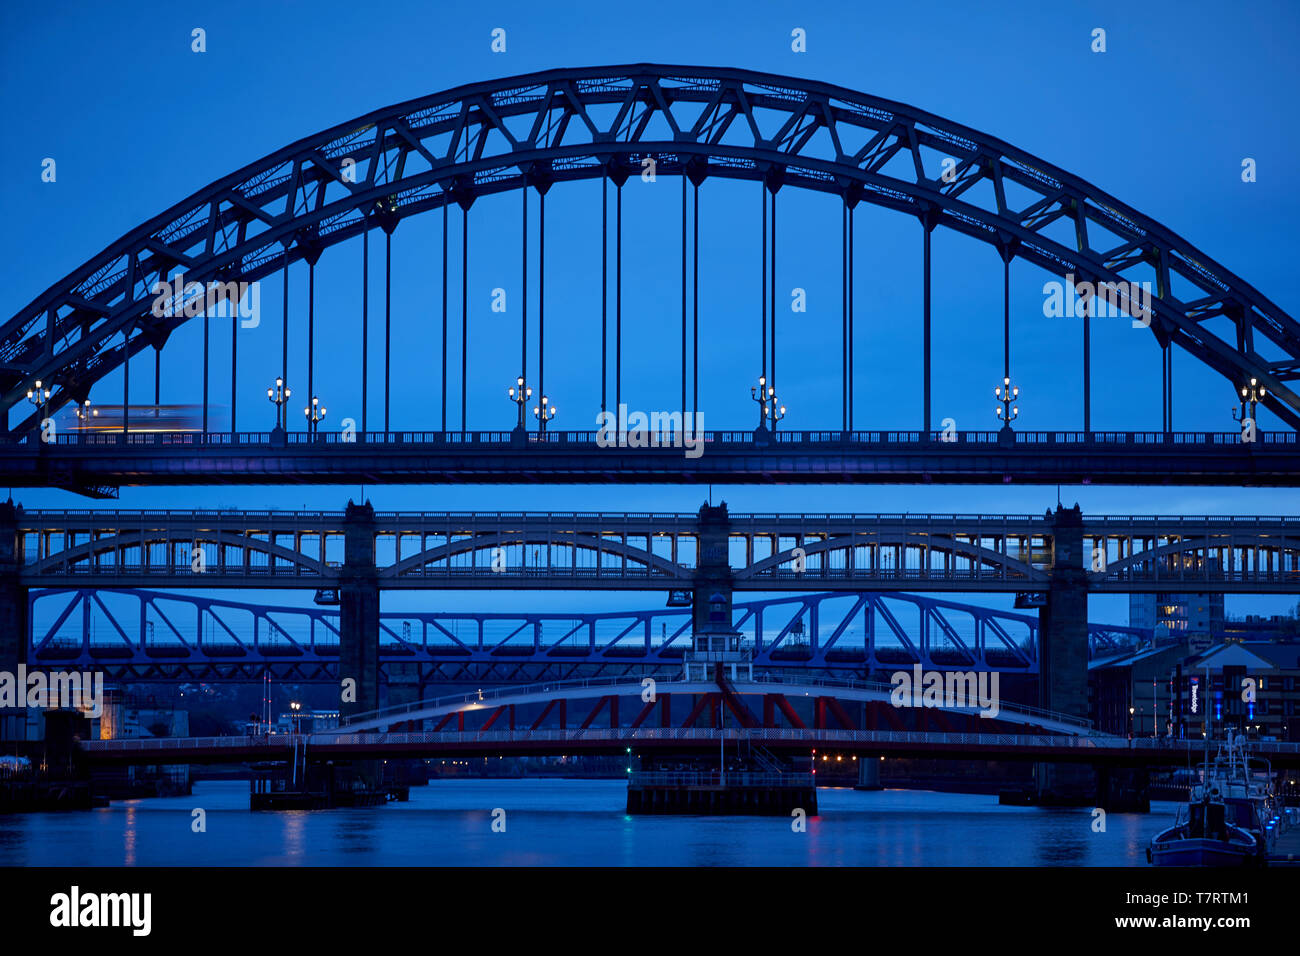 Iconic Newcastle upon Tyne  Quayside waterfront  landmark Tyne Bridge, Swing Bridge, High Level bridge and beyond is King Edward VII Bridge Stock Photo